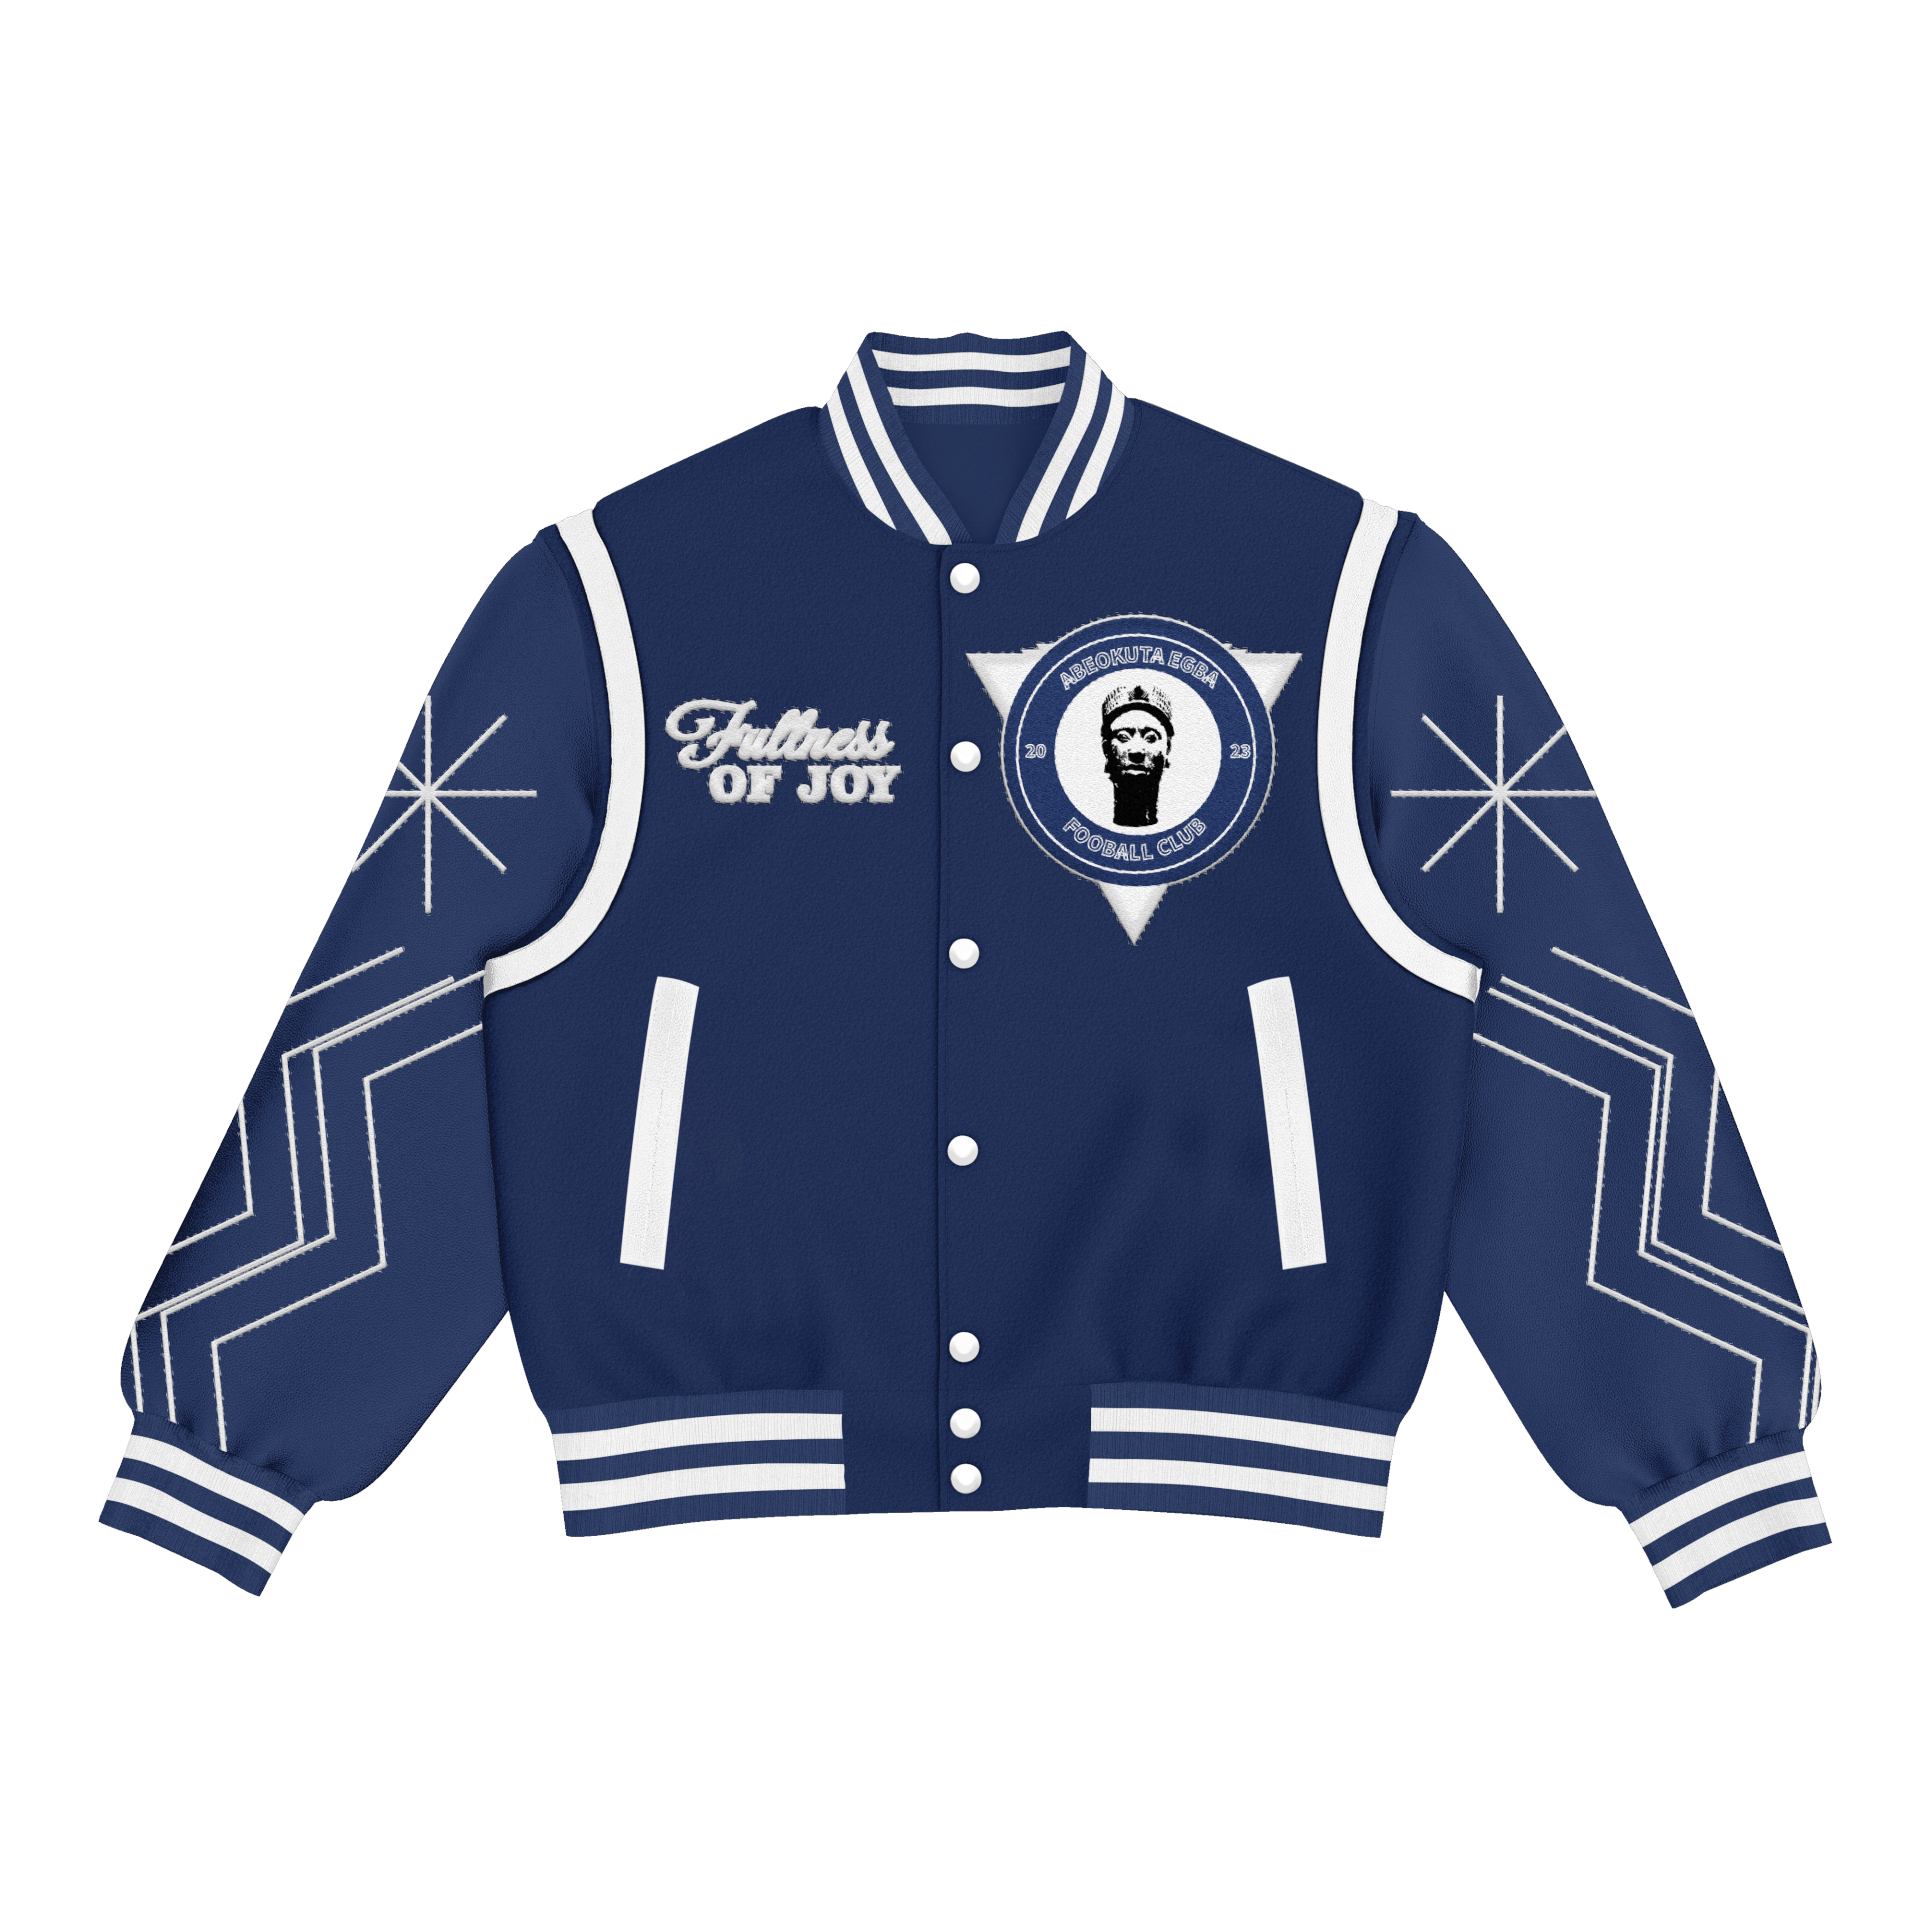 This is the Abeokuta varsity jacket.